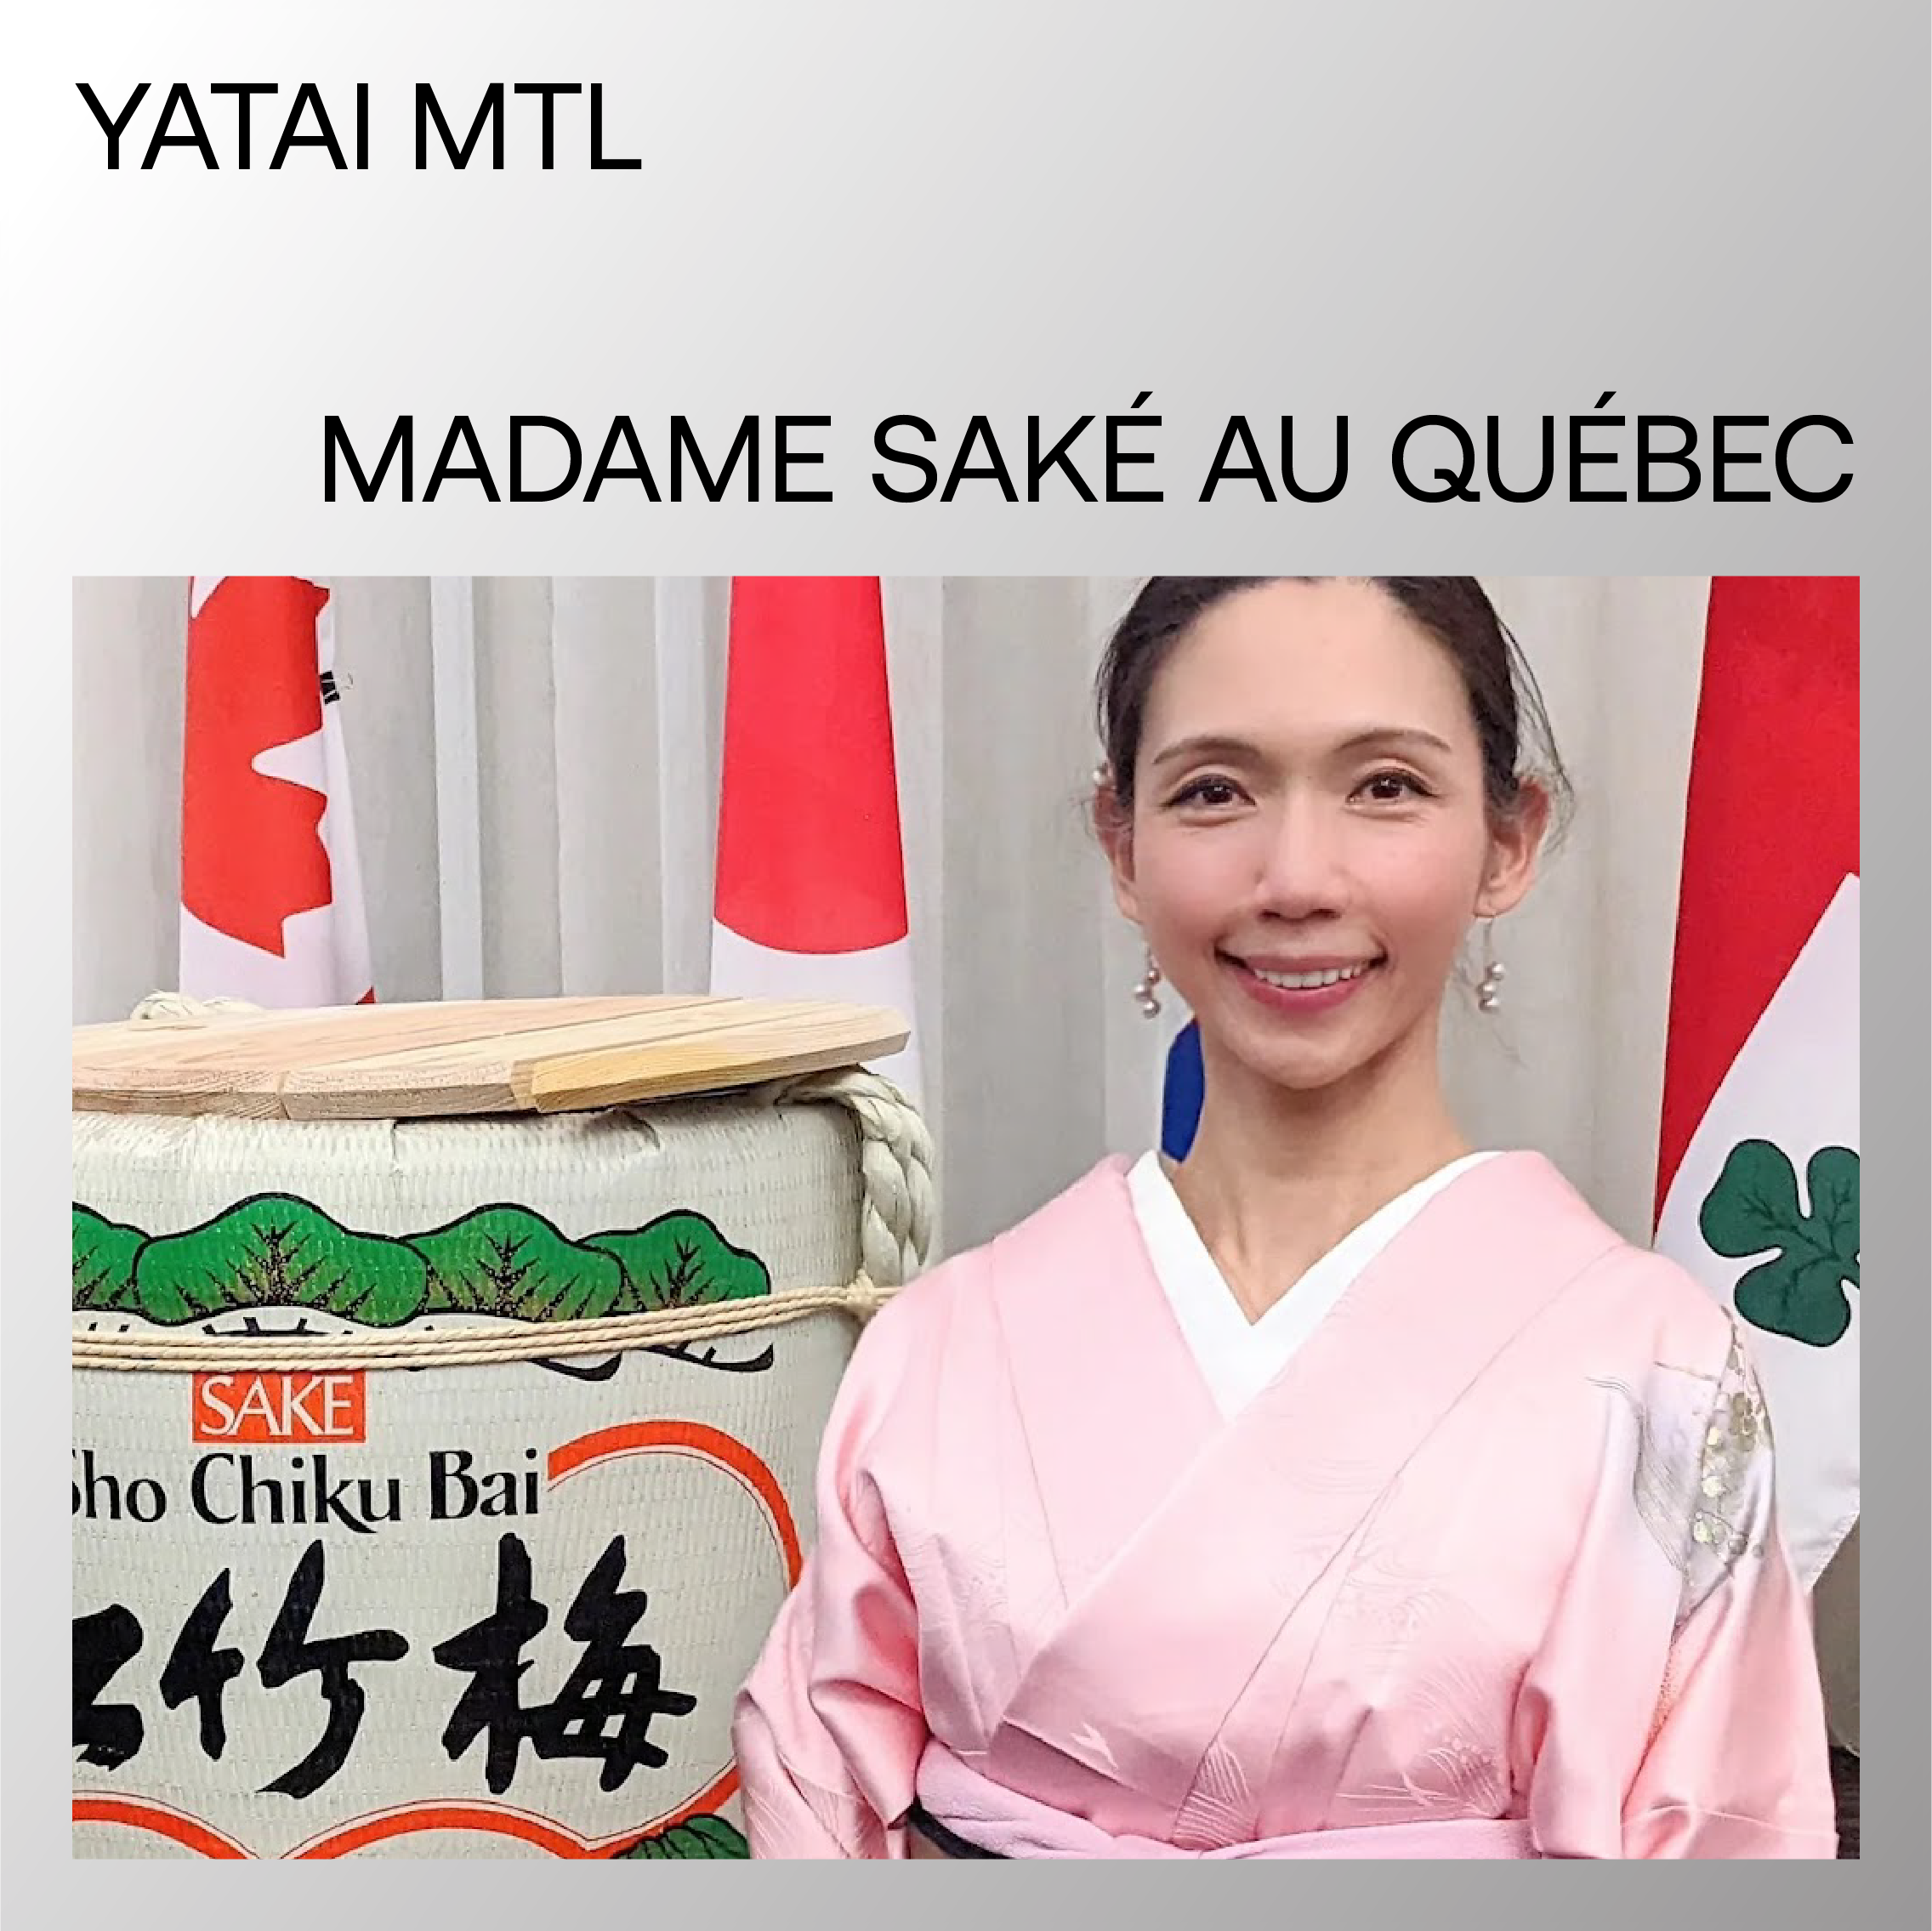 Madame Saké au Québec